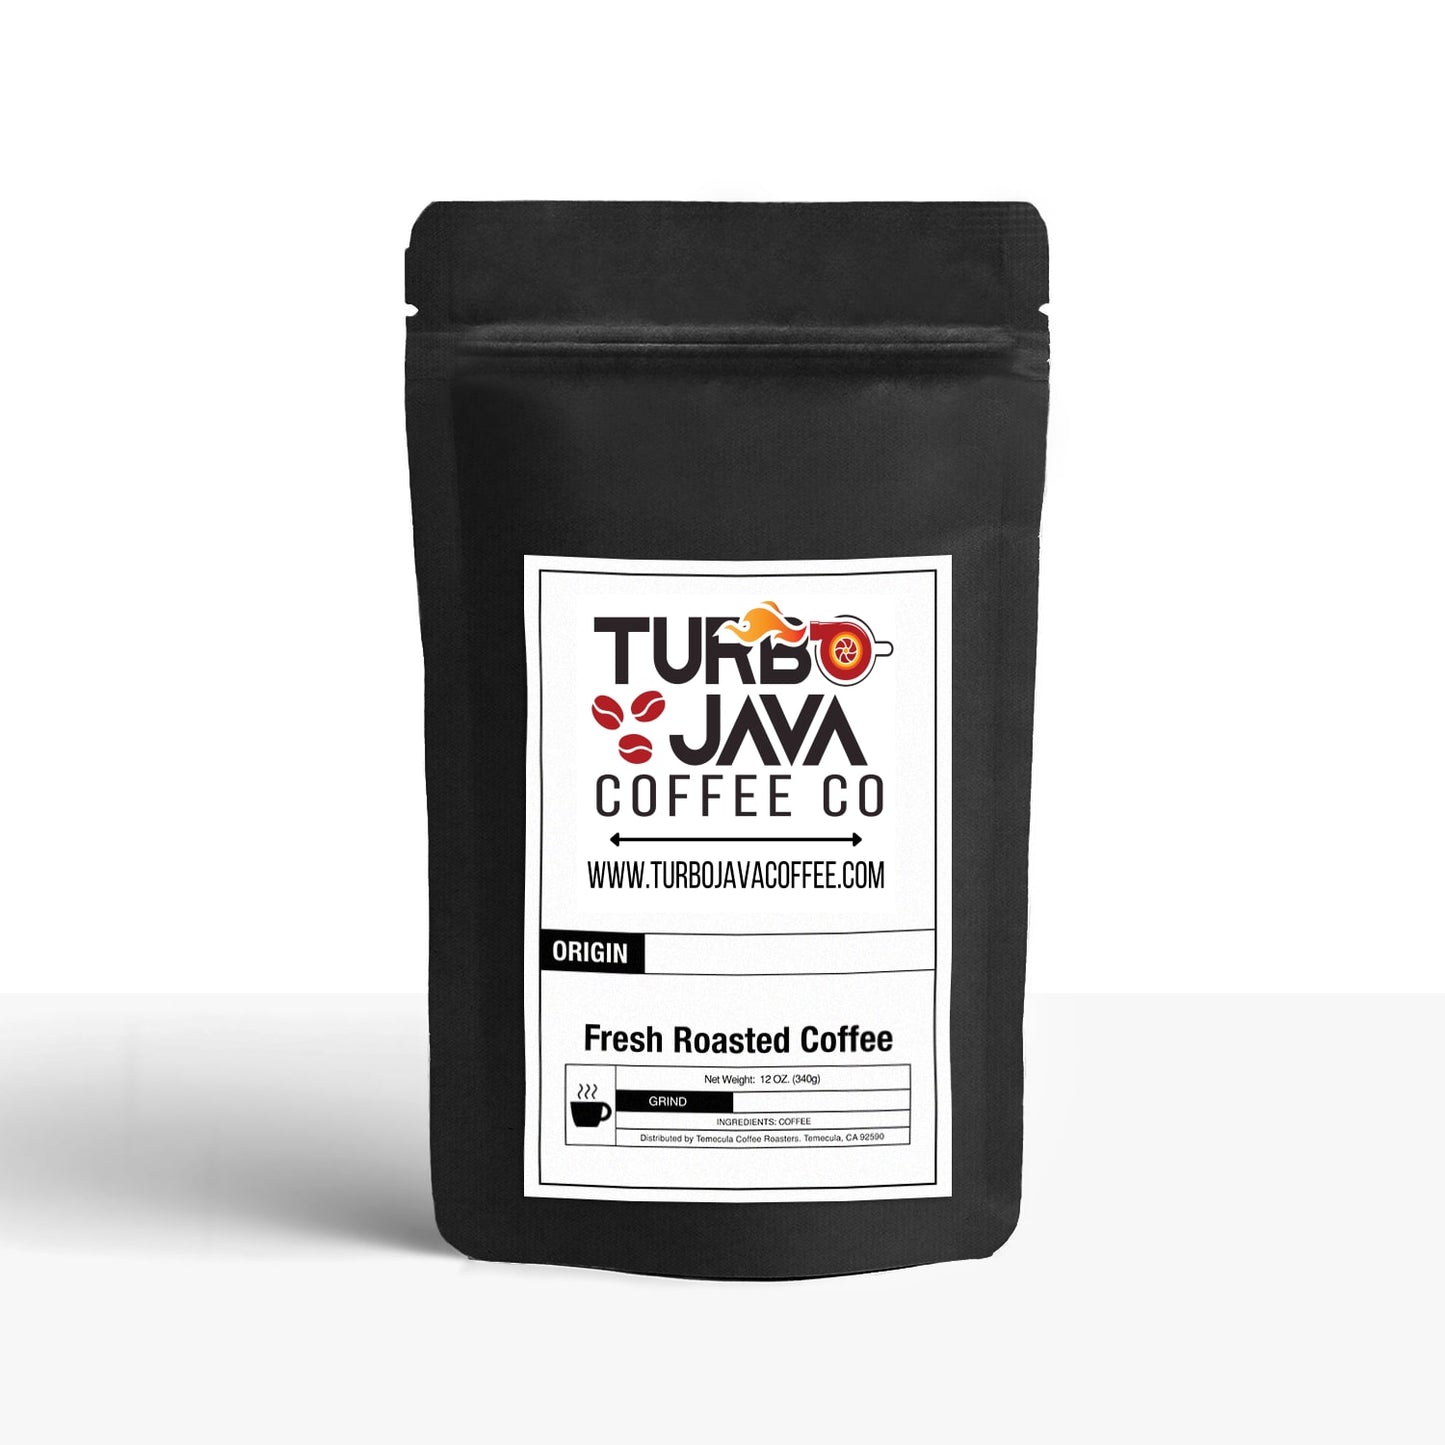 Turbo Java Coffee Co. African Kahawa Blend Coffee 12 oz / Standard,12 oz / Espresso,12 oz / Whole Bean,1 lb / Standard,1 lb / Espresso,1 lb / Whole Bean,2 lb / Standard,2 lb / Espresso,2 lb / Whole Bean,5 lb / Standard,5 lb / Espresso,5 lb / Whole Bean